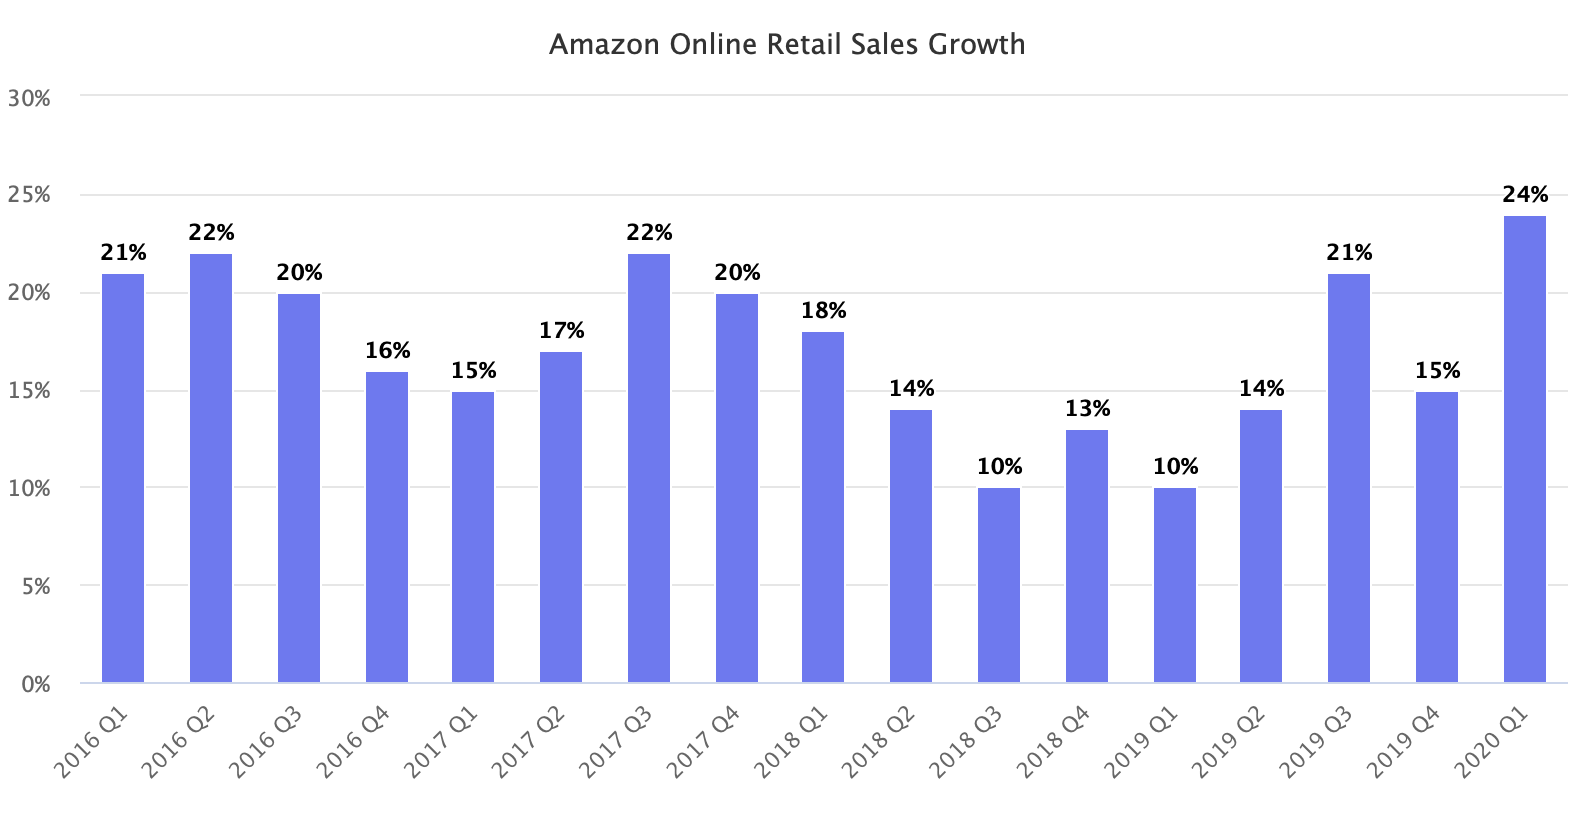 Amazon Online Retail Sales Growth